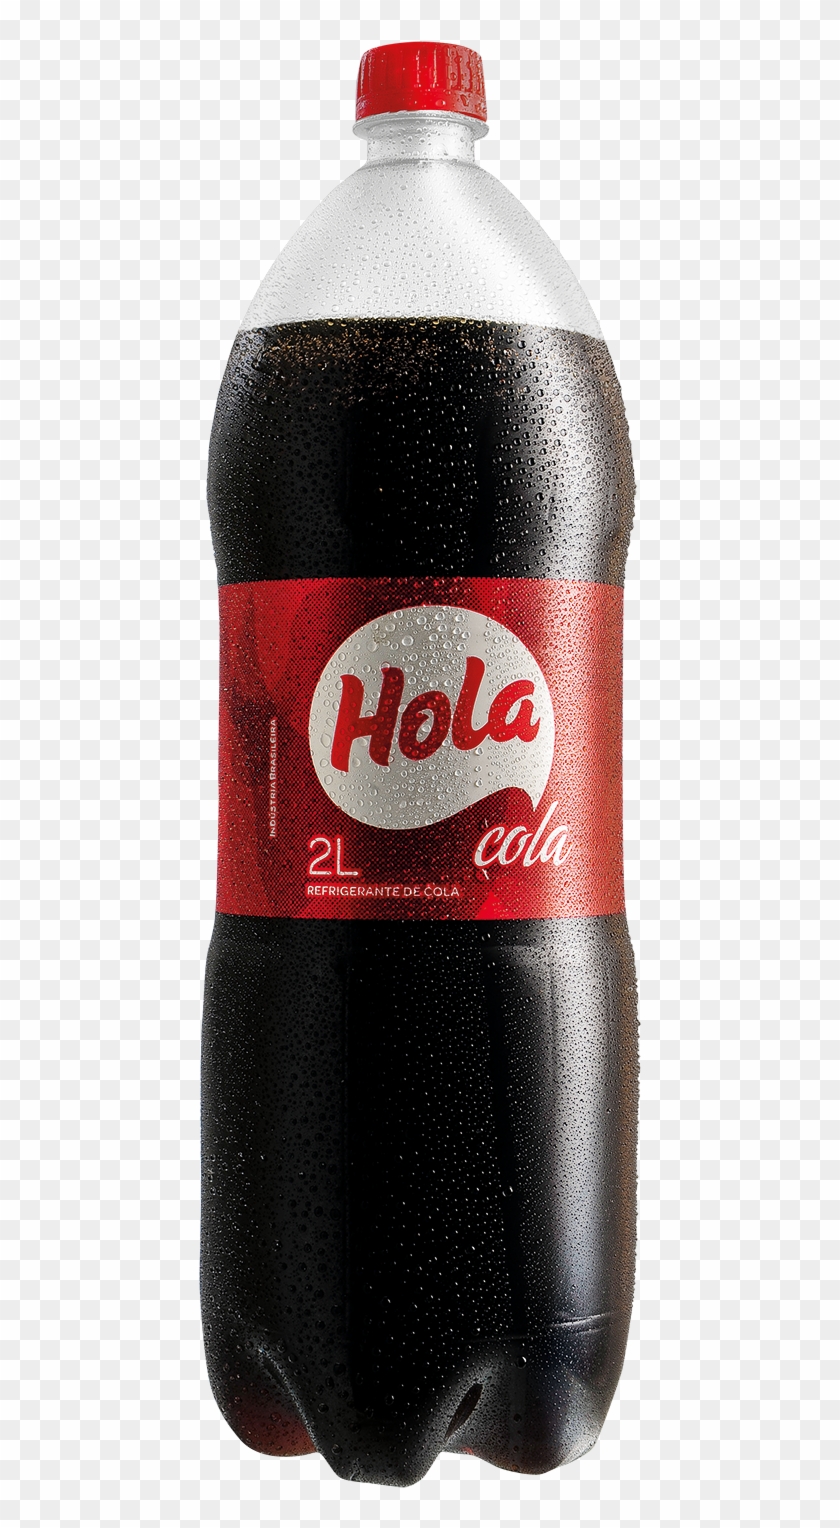 Hola Cola Mockup - Hola Cola Clipart #5873240